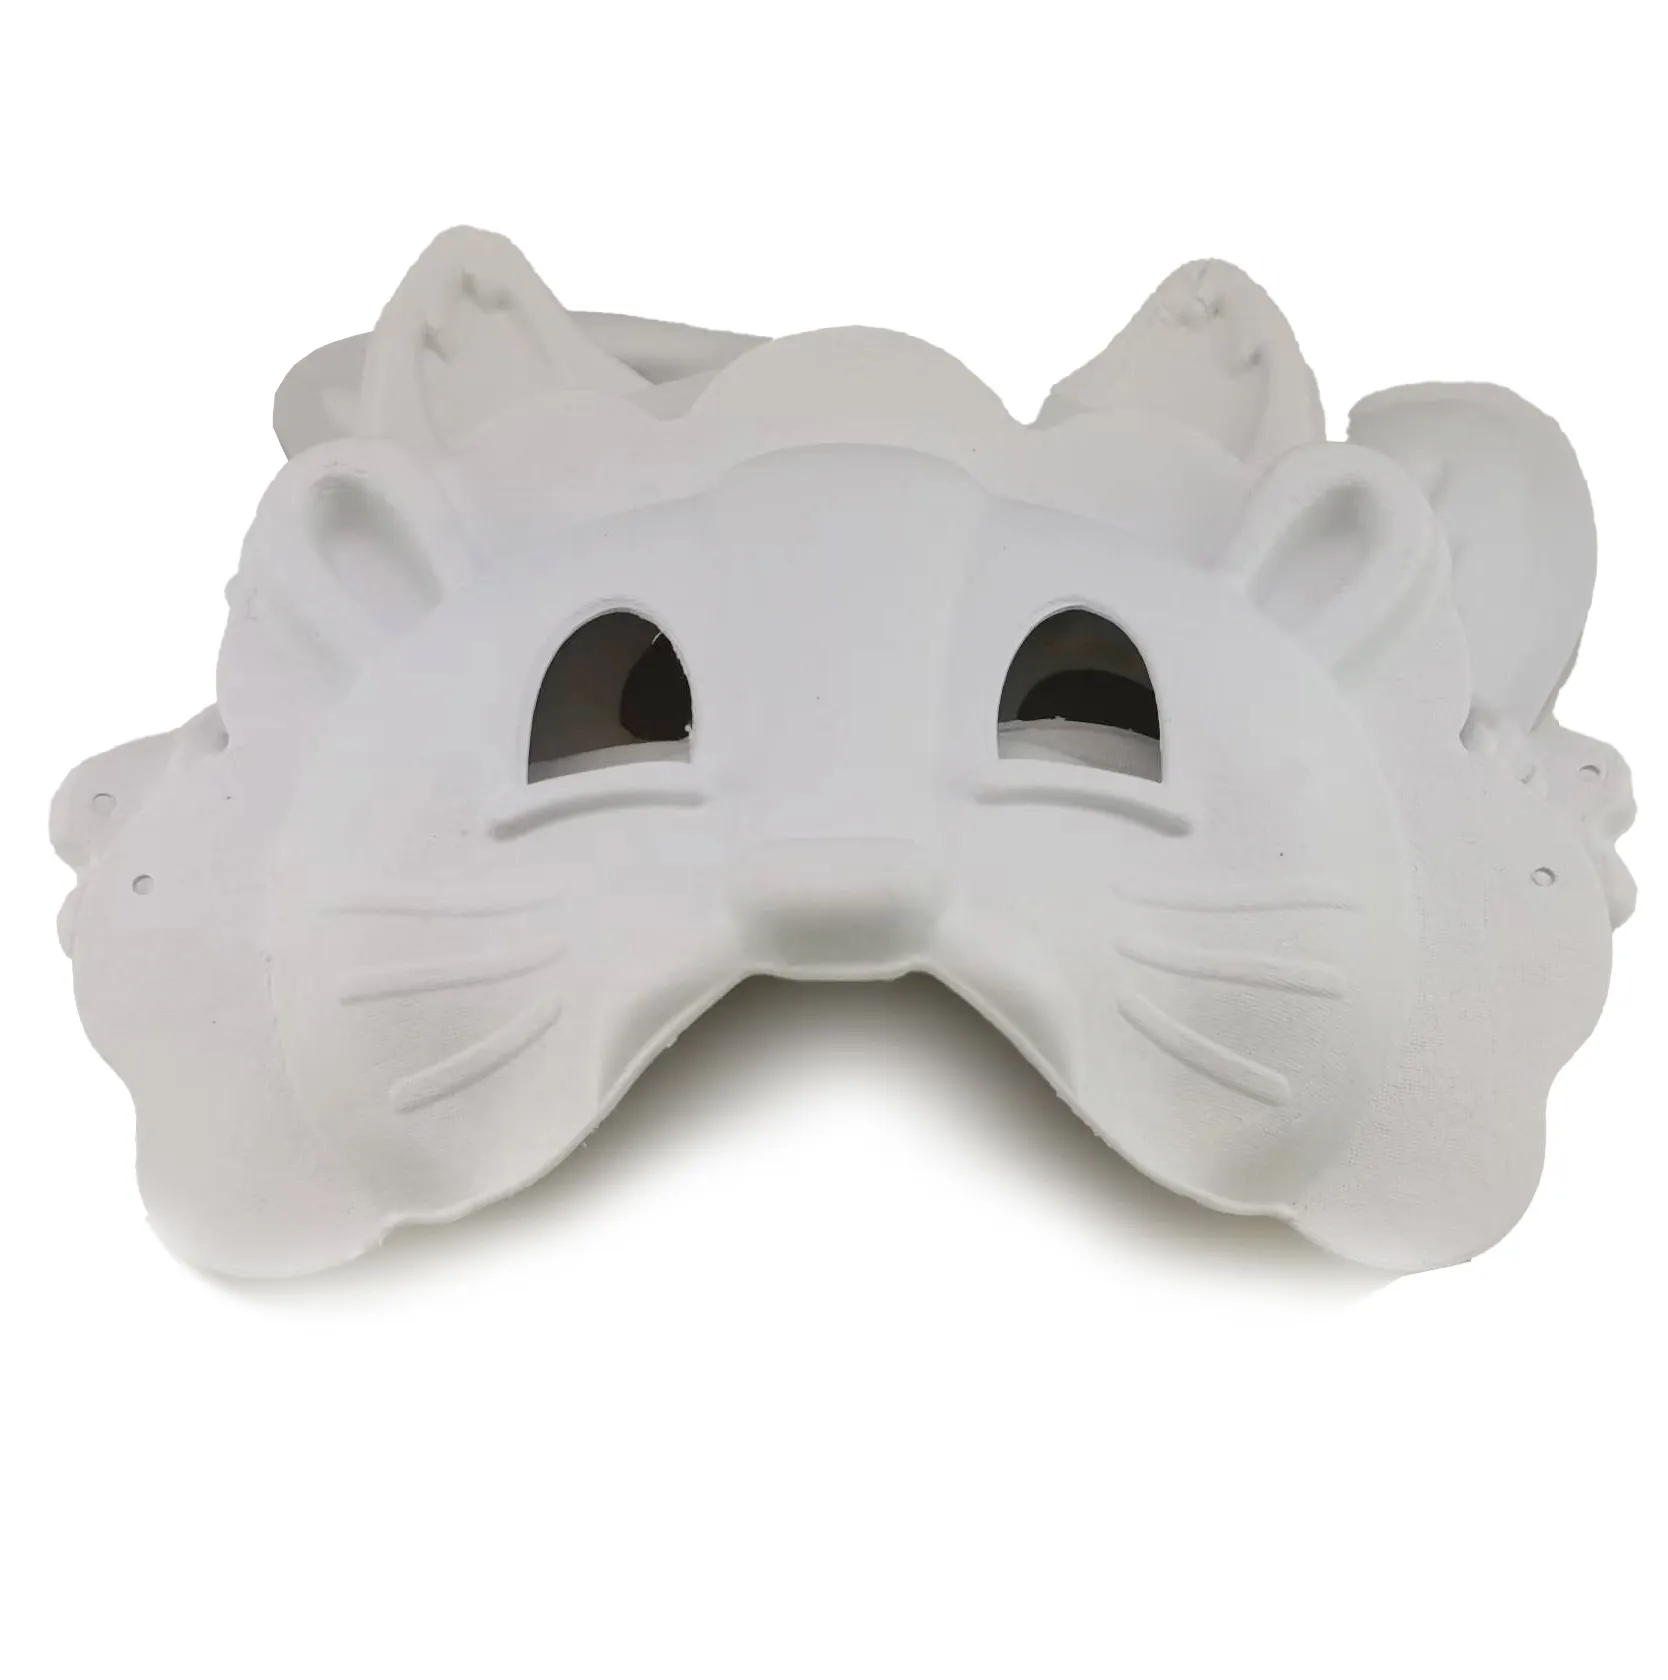 Maschera in maschera per uomo e donna maschera in Costume da festa romana per rinascimentale Cosplay e Fancy Dress Party Fox cat Mask per bambino